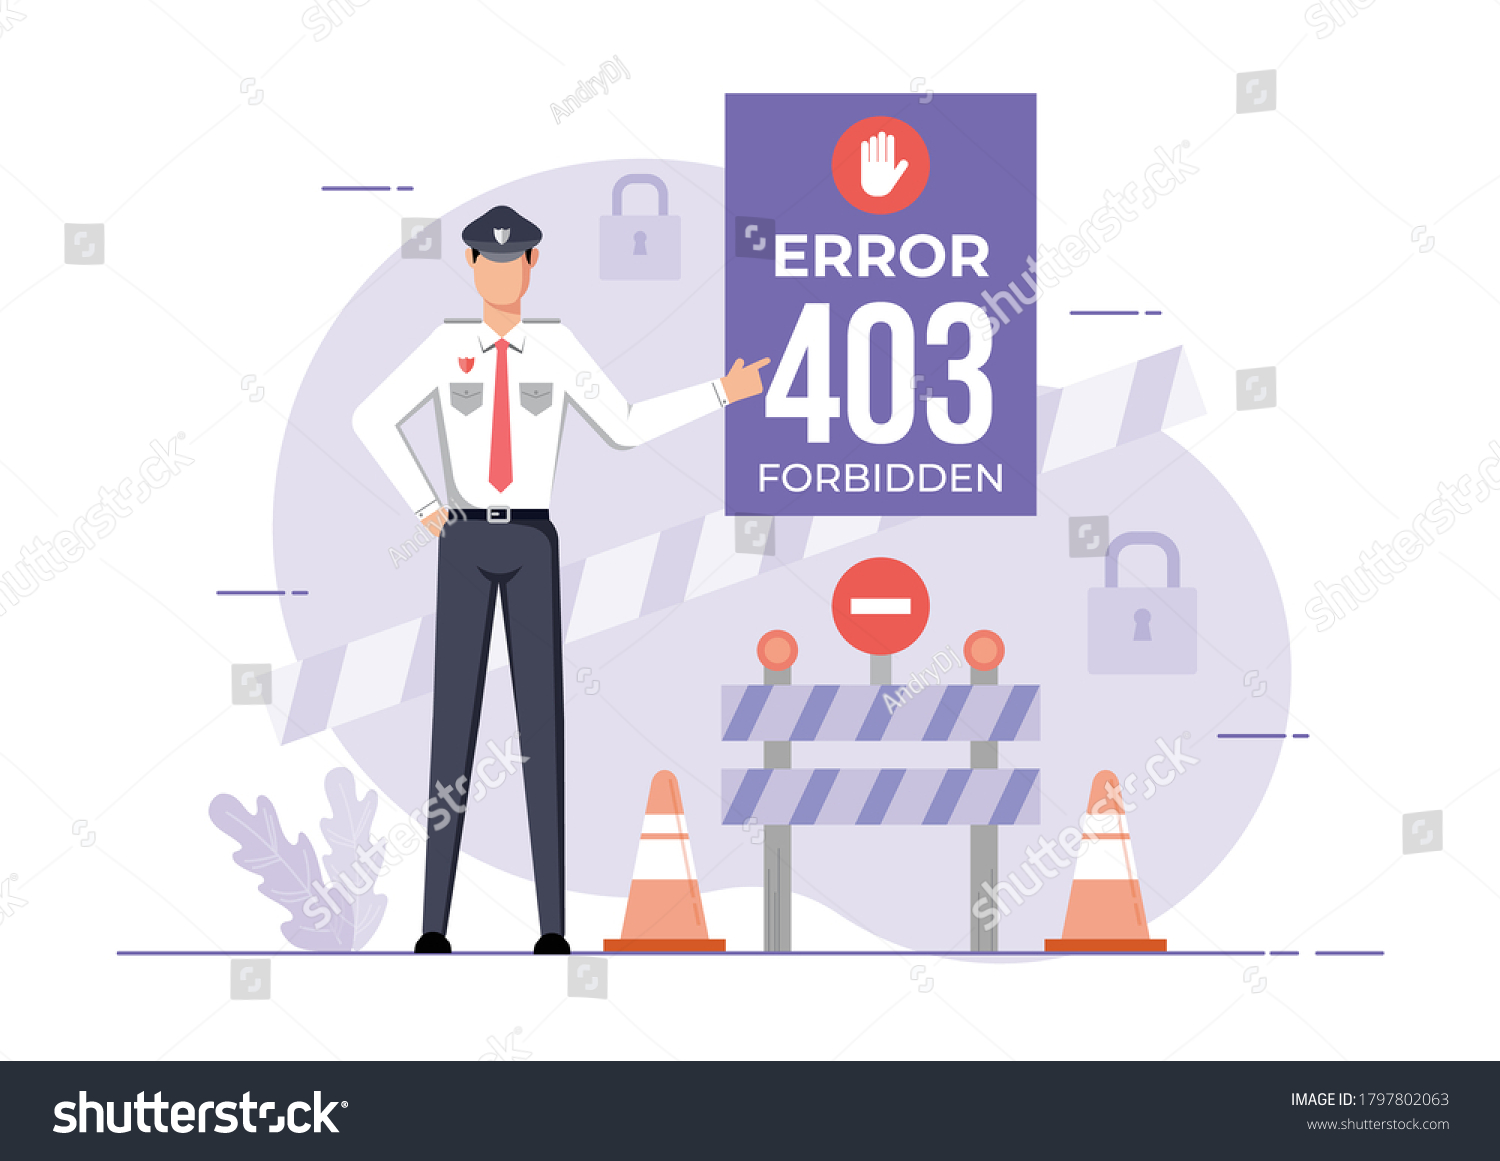 SVG of An illustration for page 403 Error forbidden site. Connection error Access Denied. svg